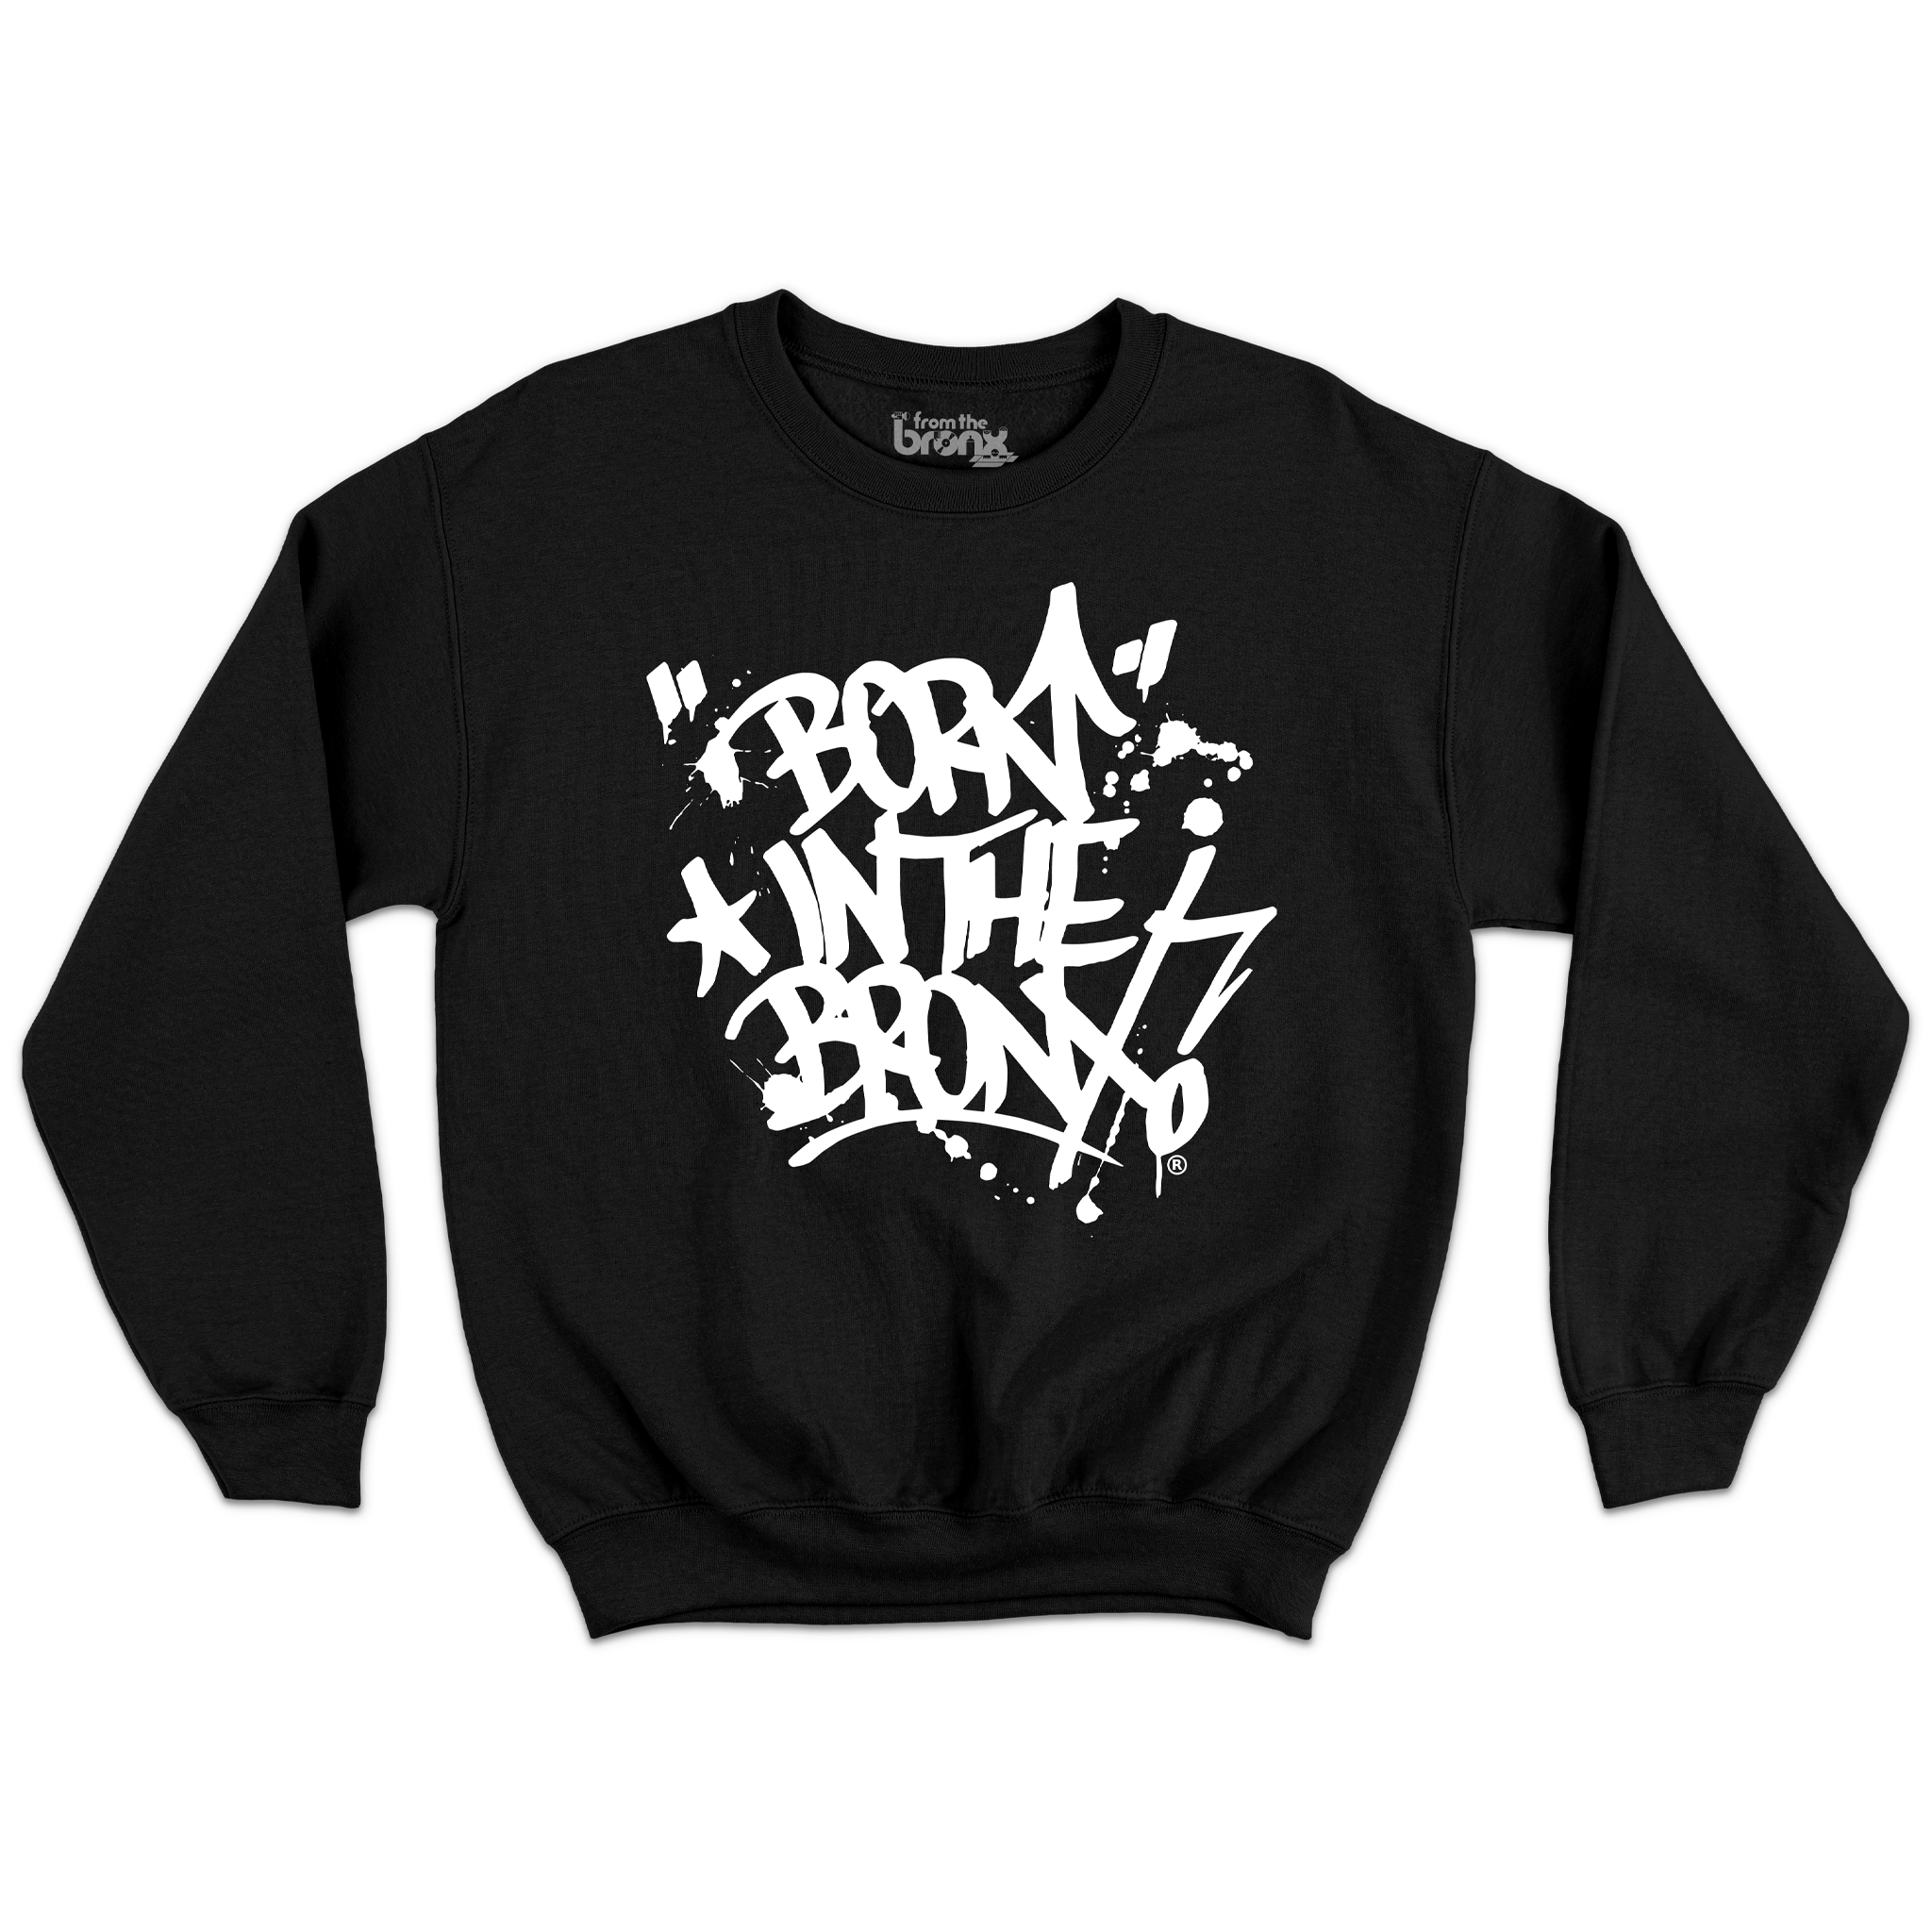 "Born" in The Bronx! Paint Splatter T-Shirt Front in White on Black